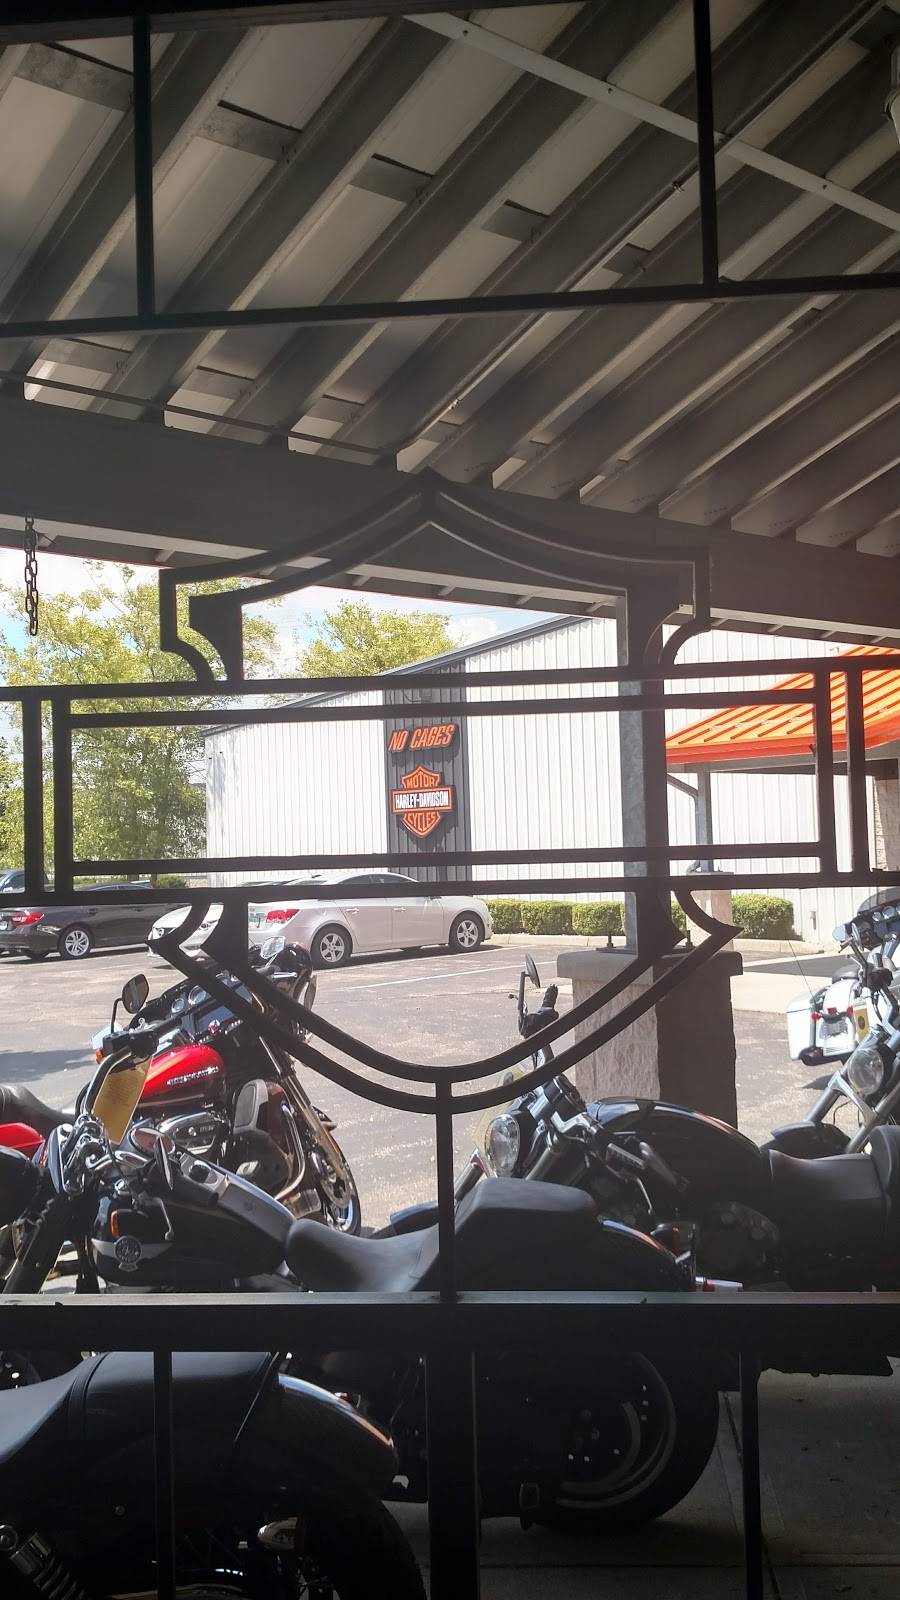 No Cages Harley Davidson® | 7610 Commerce Pl, Plain City, OH 43064, USA | Phone: (614) 764-2453